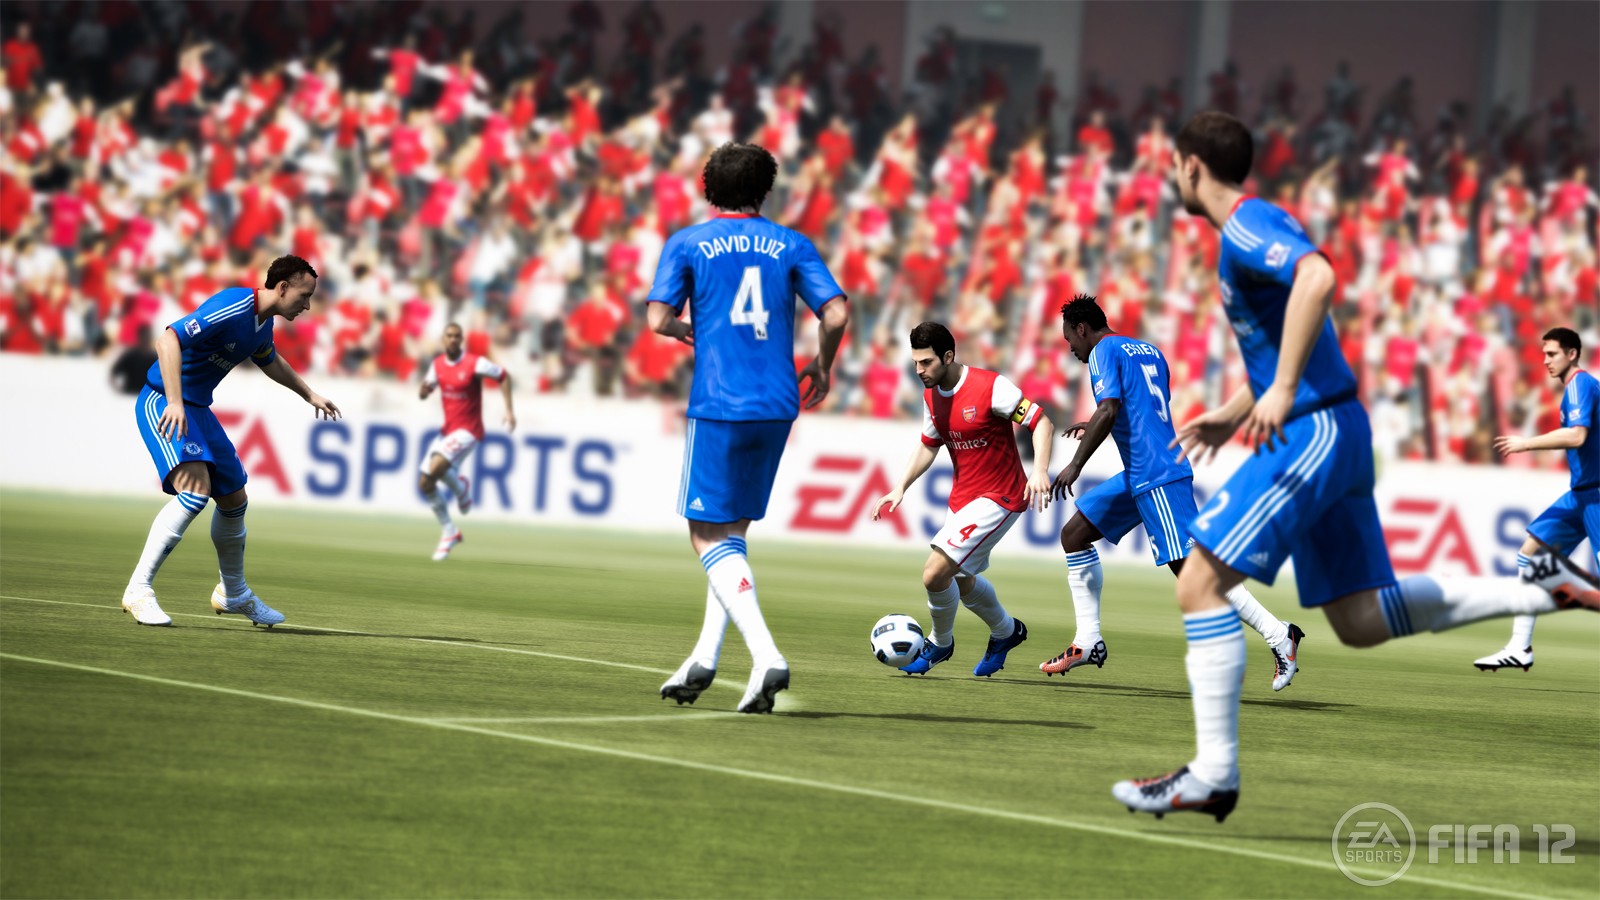 Taktischere Tacklings, przisiere Dribblings - FIFA 12 fhlt sich freier an.